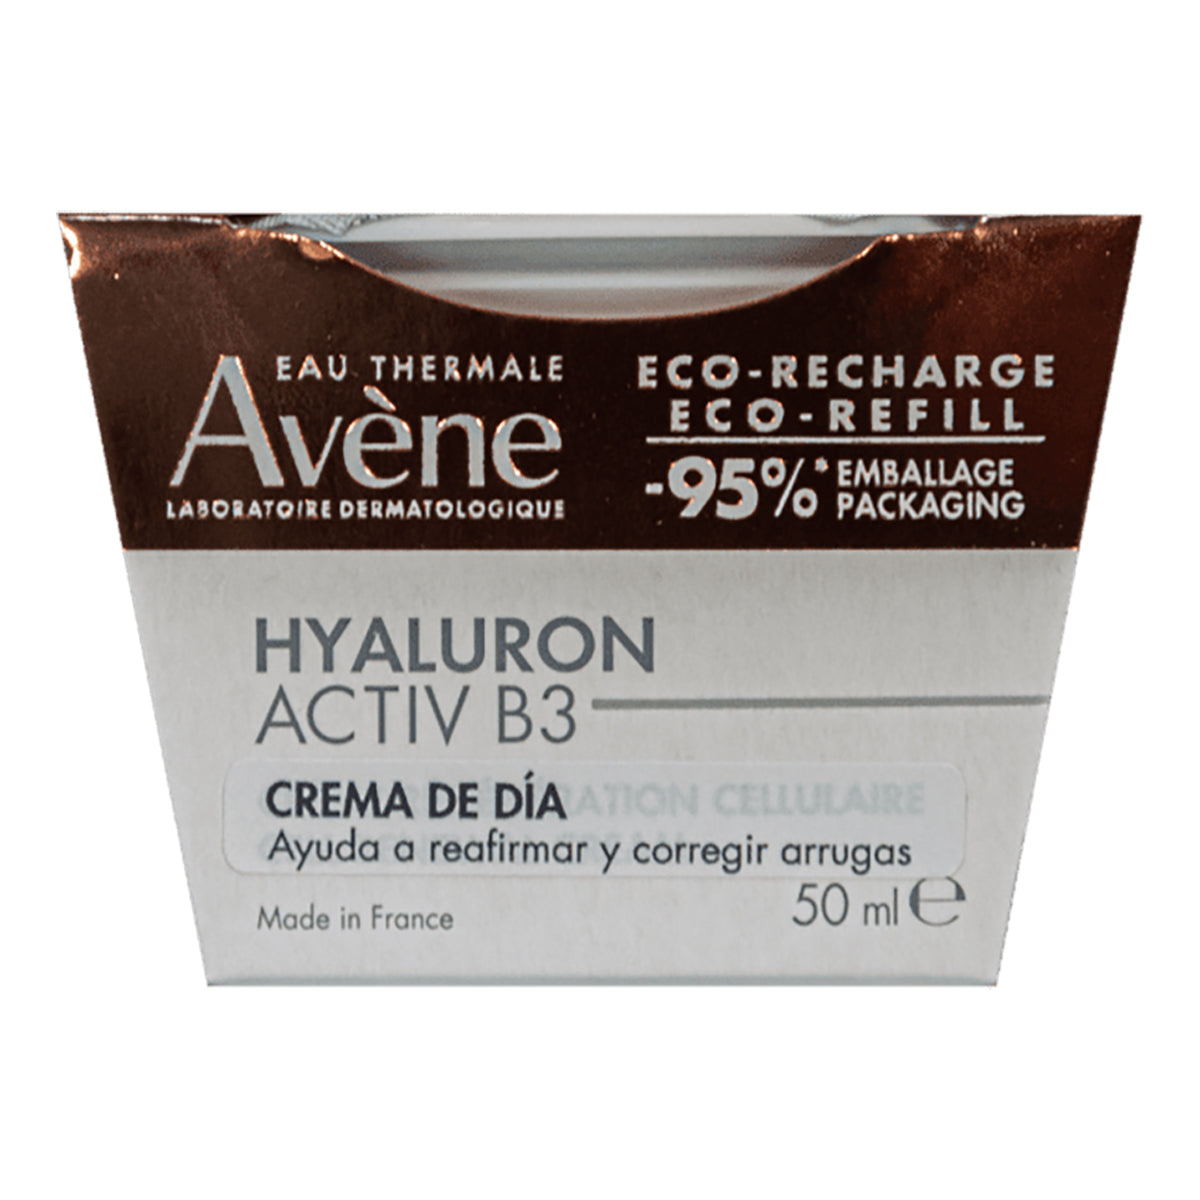 Avene hyaluron activ b3 crema regeneradora de dia refill 50ml.